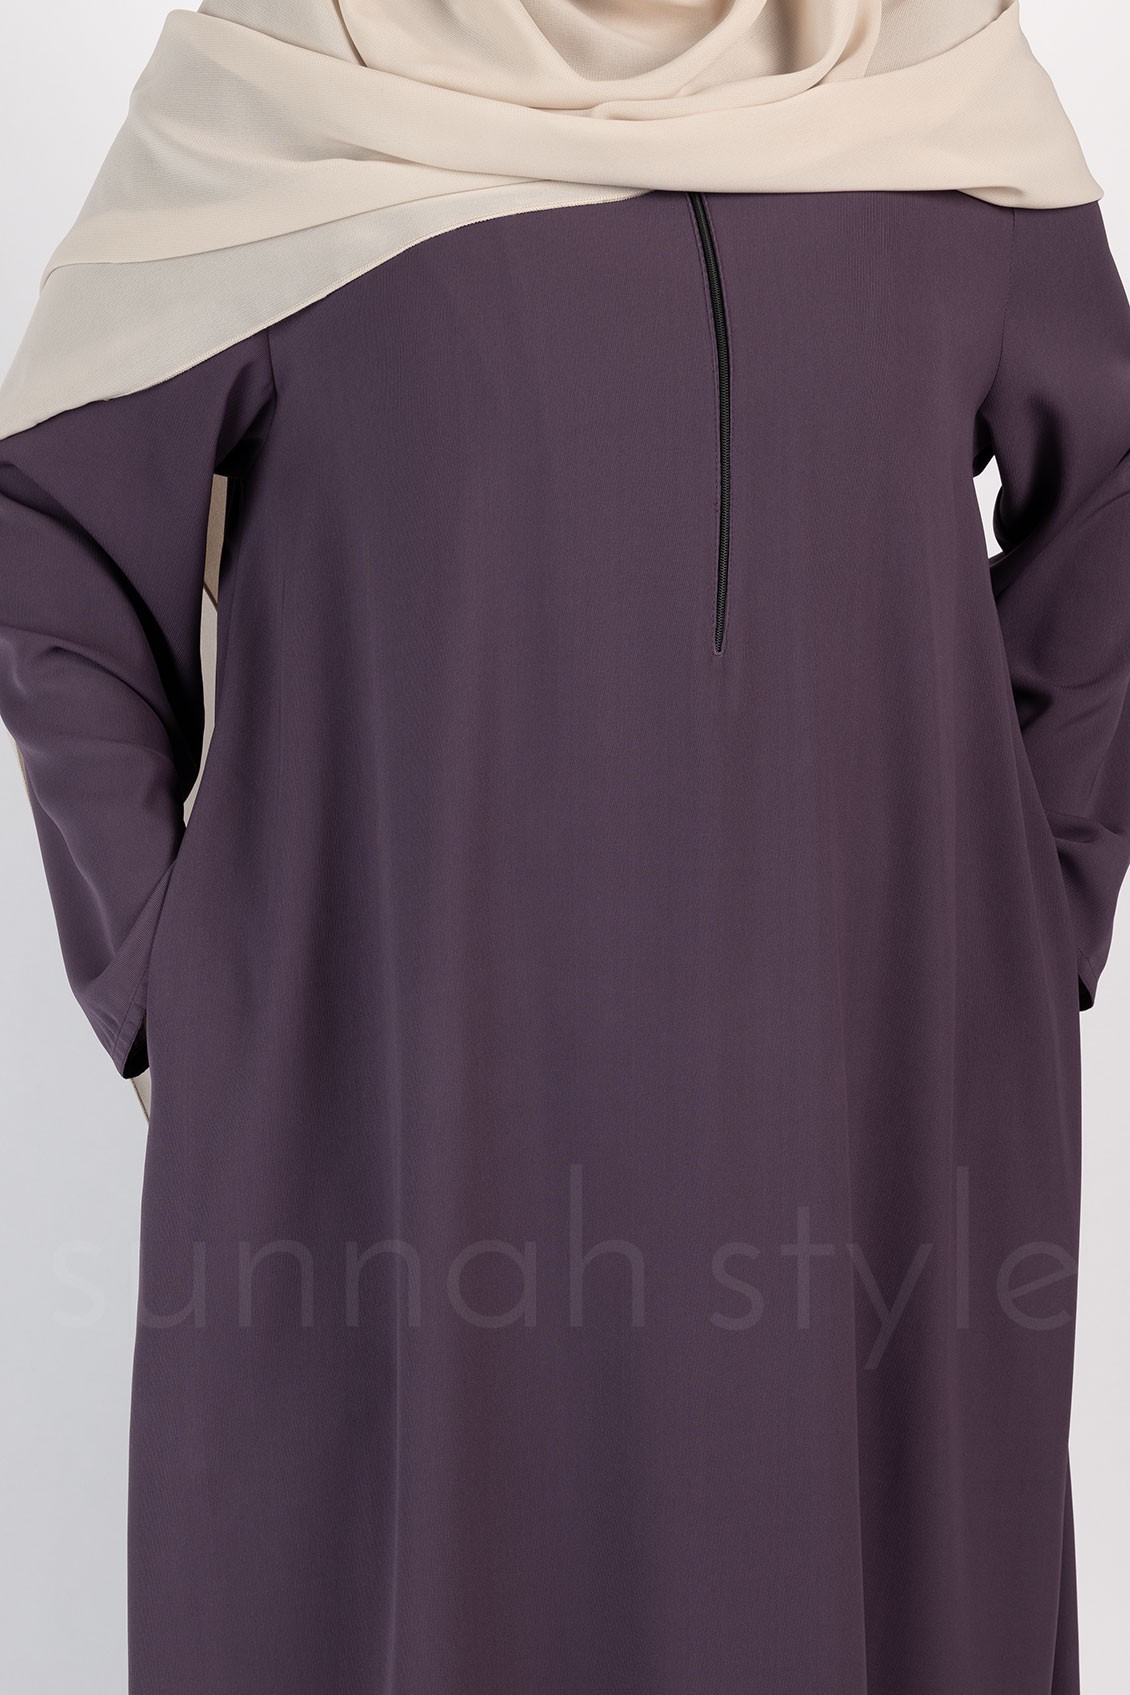 Sunnah Style Essentials Closed Abaya Lilac